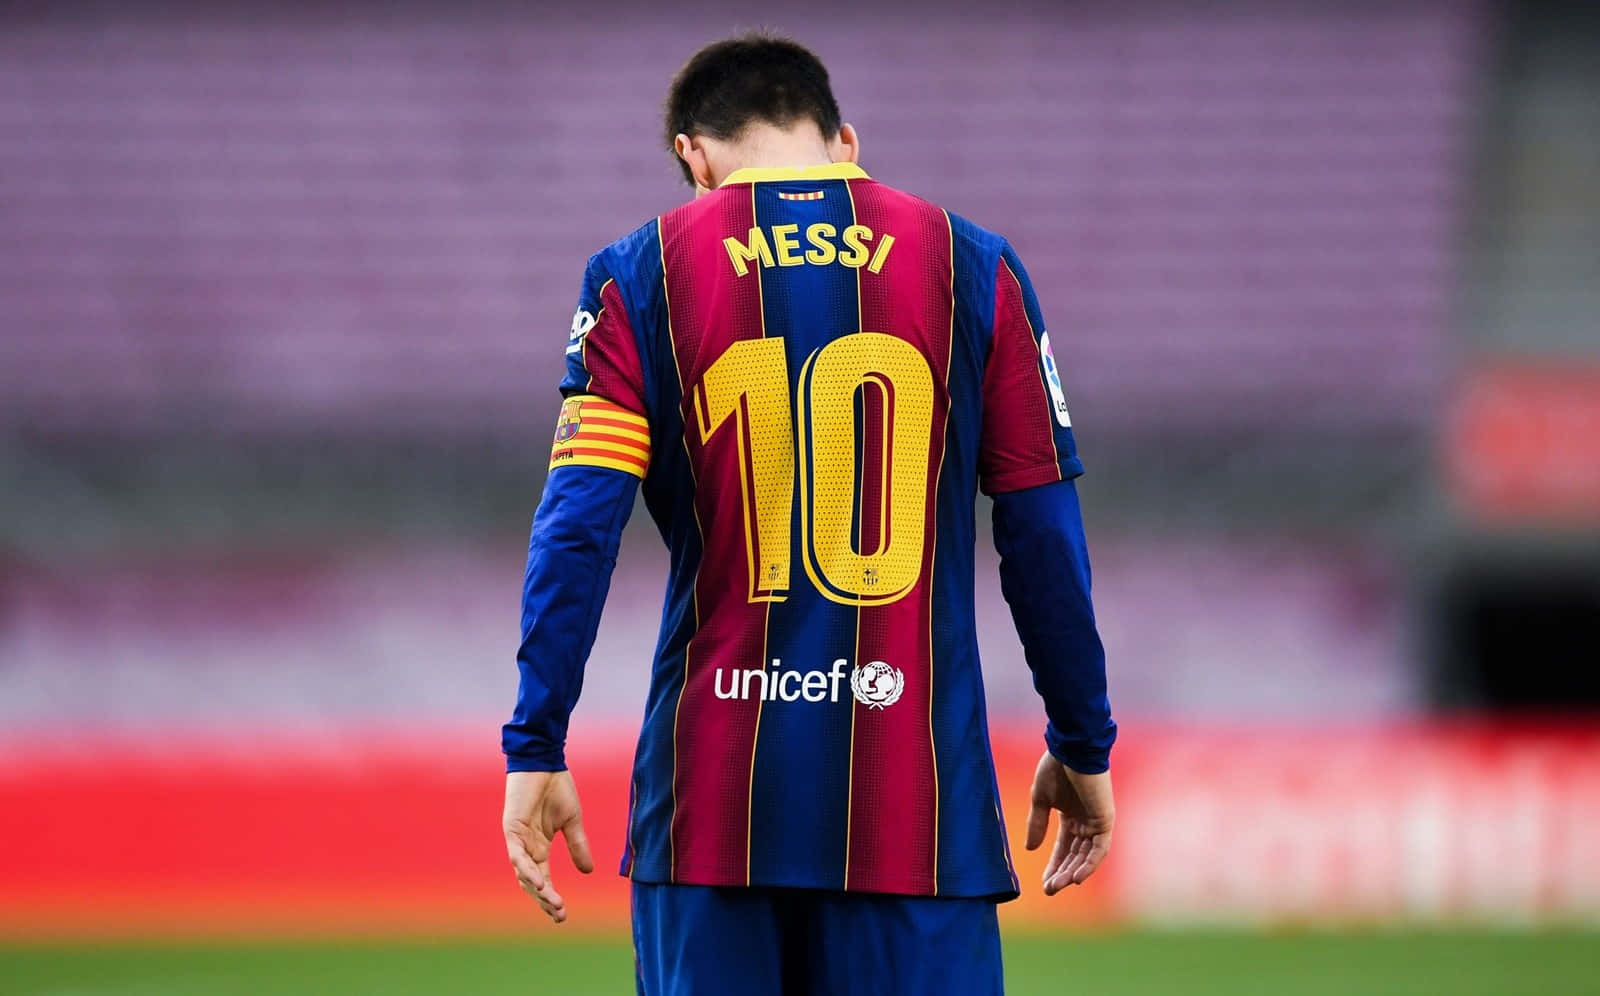 Messi Number10 Barcelona Jersey Wallpaper